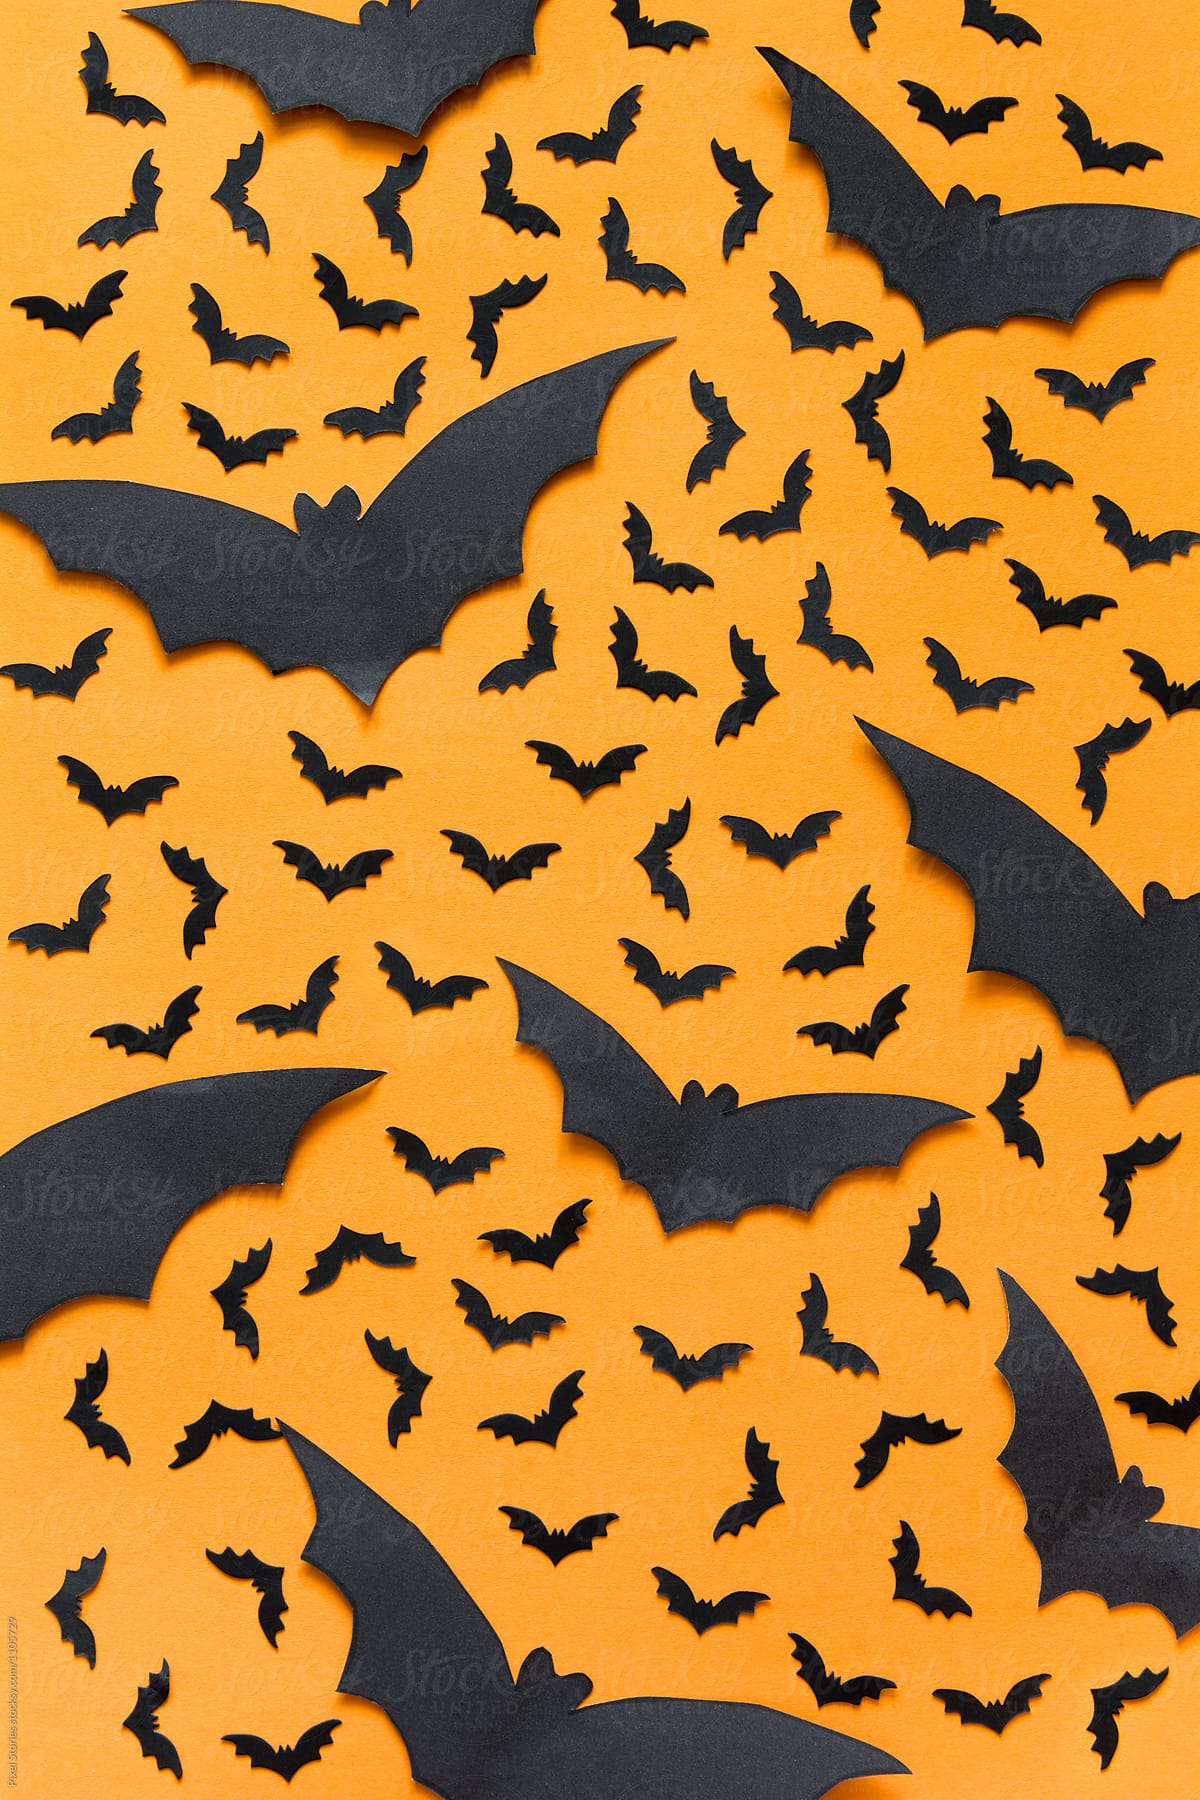 Creepy paper halloween bats